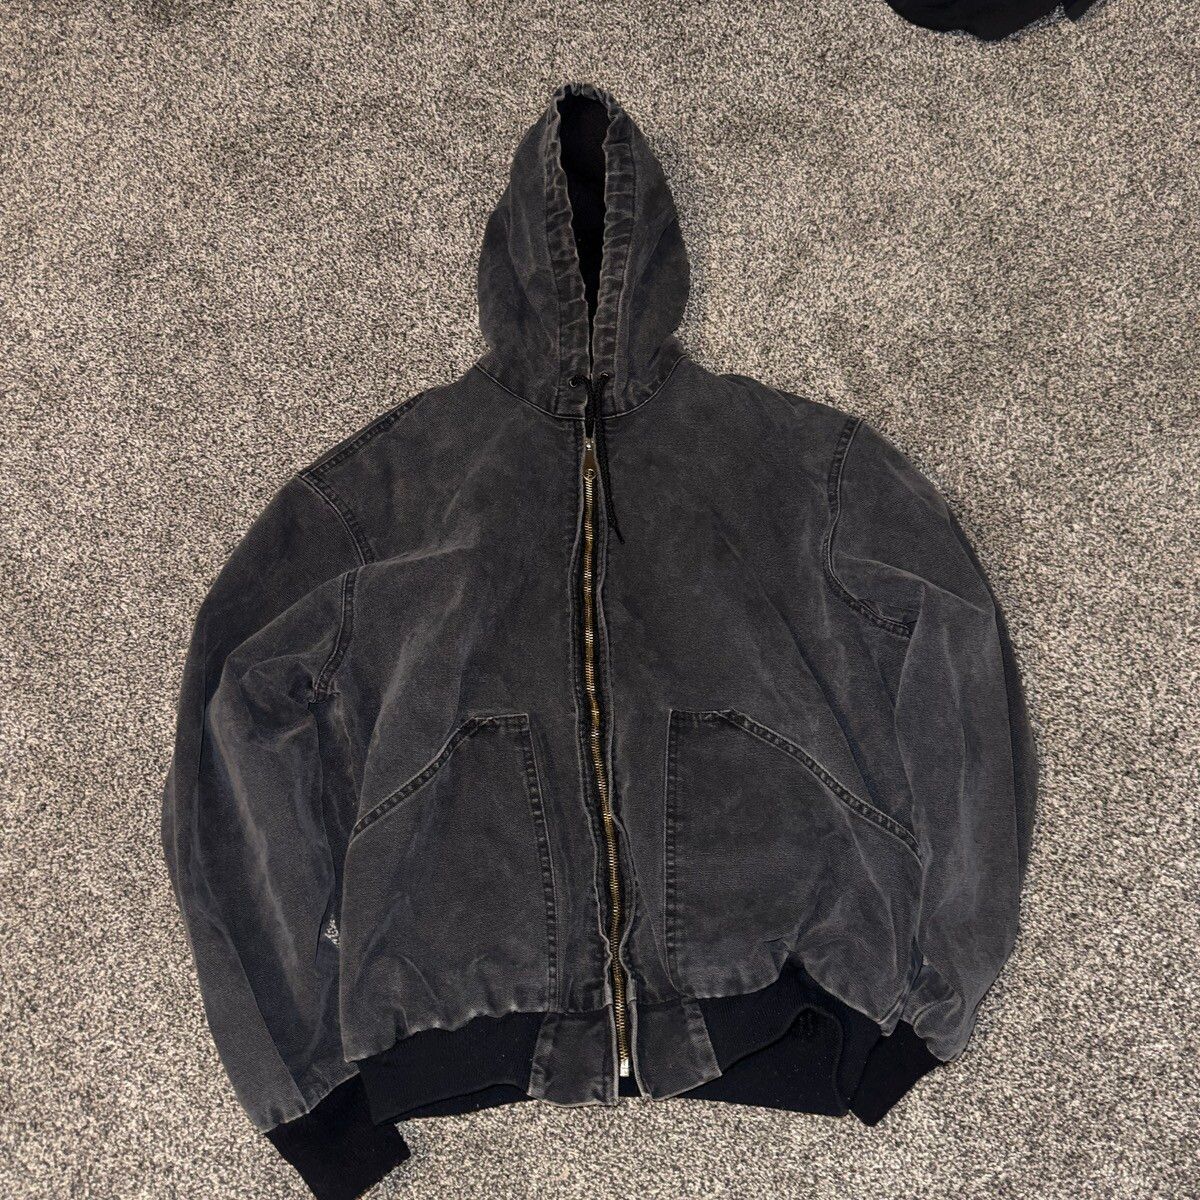 Pre-owned Carhartt X Vintage Faded Hood Jacket Black Smoke Fade Size Large Carhartt